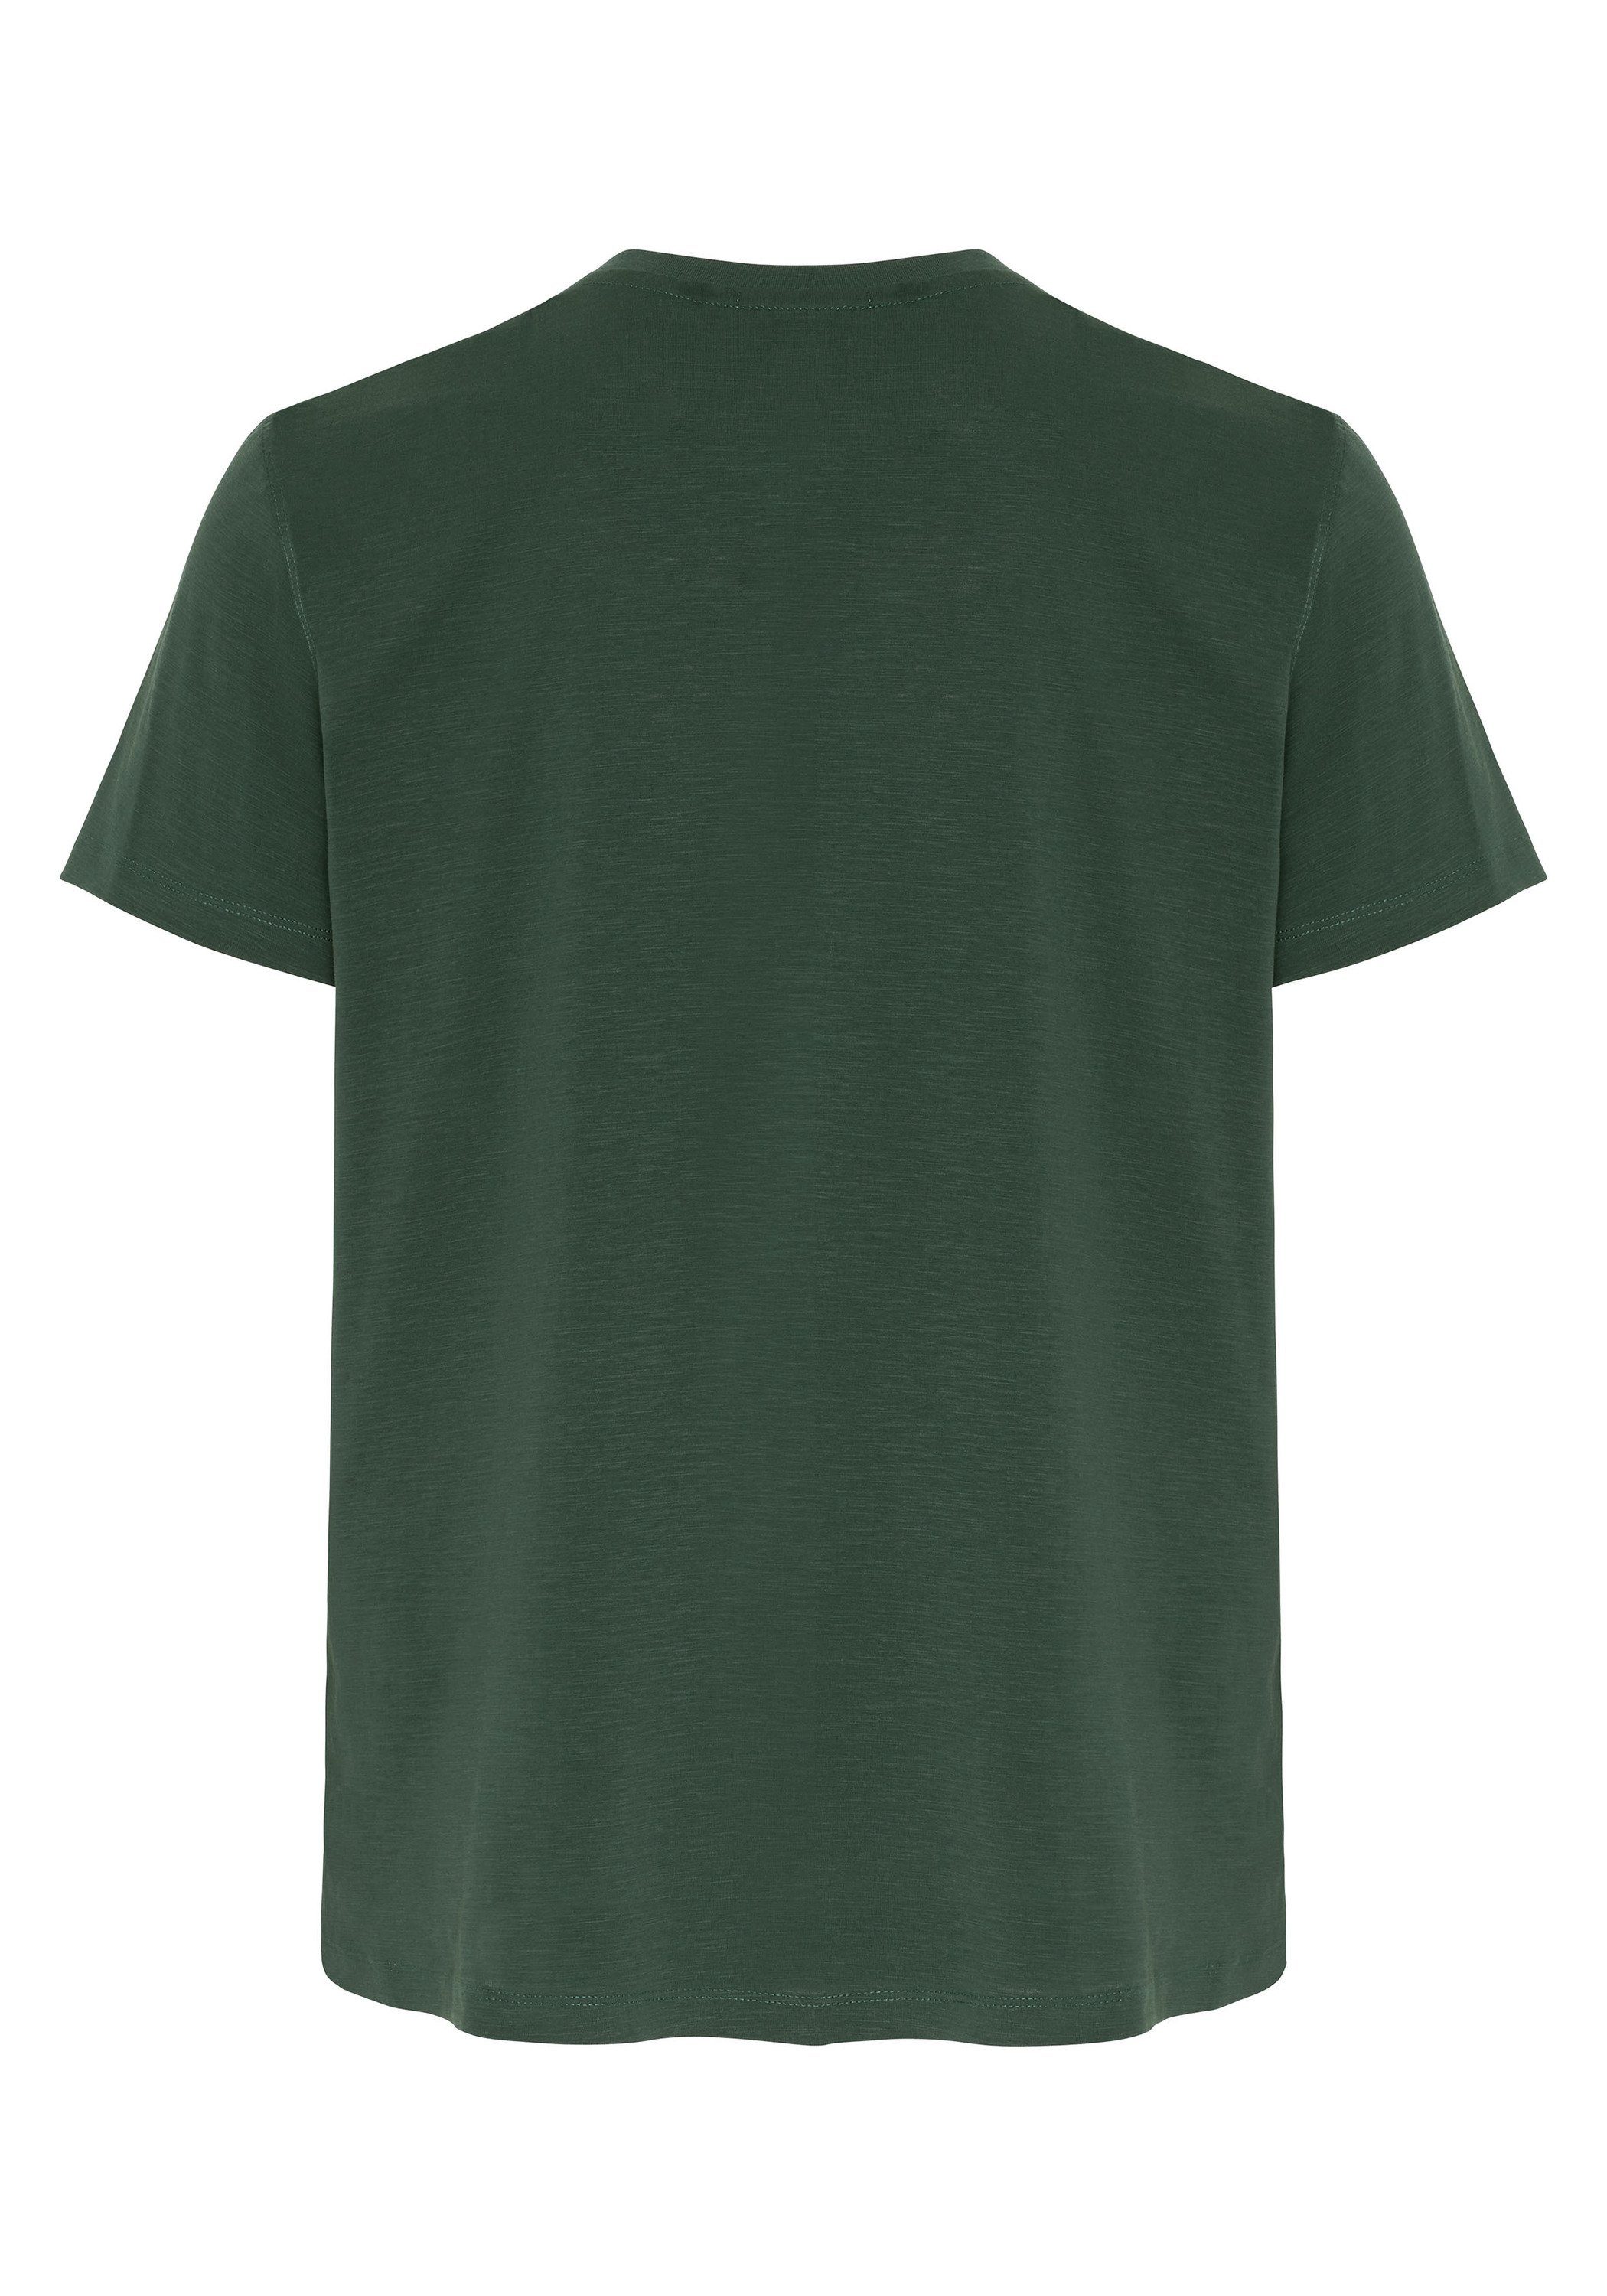 Chiemsee Print-Shirt T-Shirt im PLUS-MINUS-Design 1 Green Gables